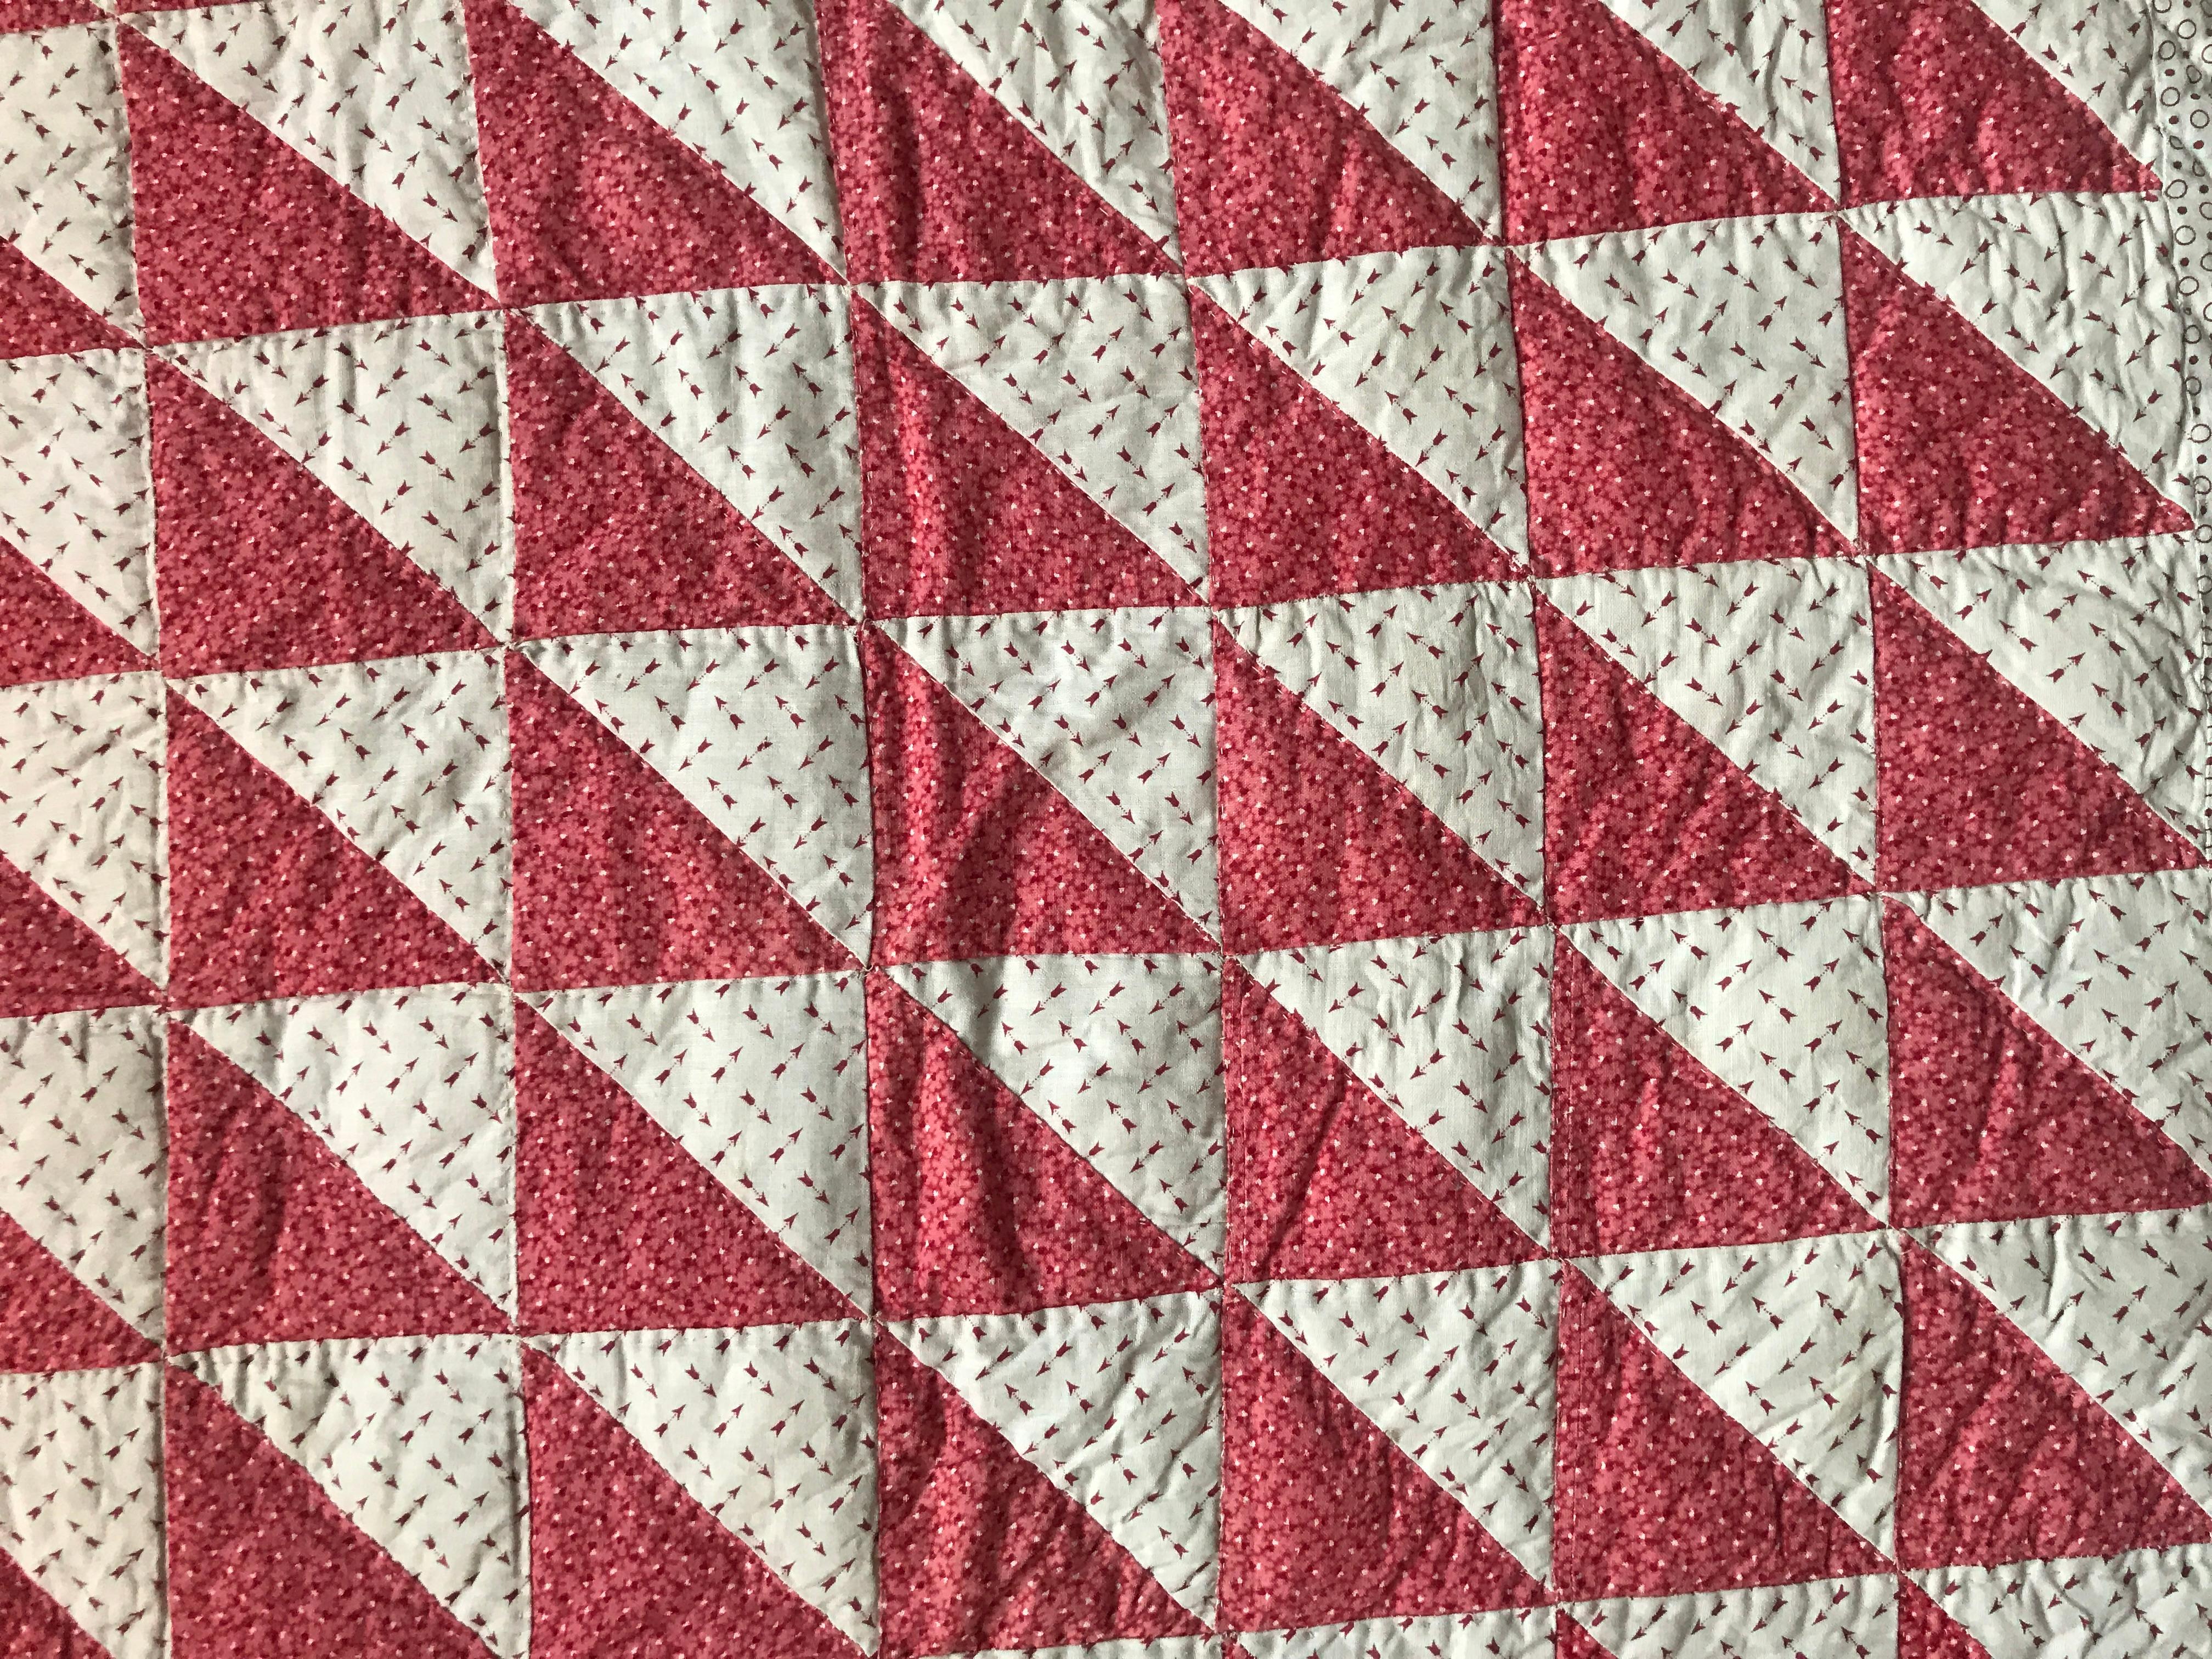 American Antique Patchwork Quilt 